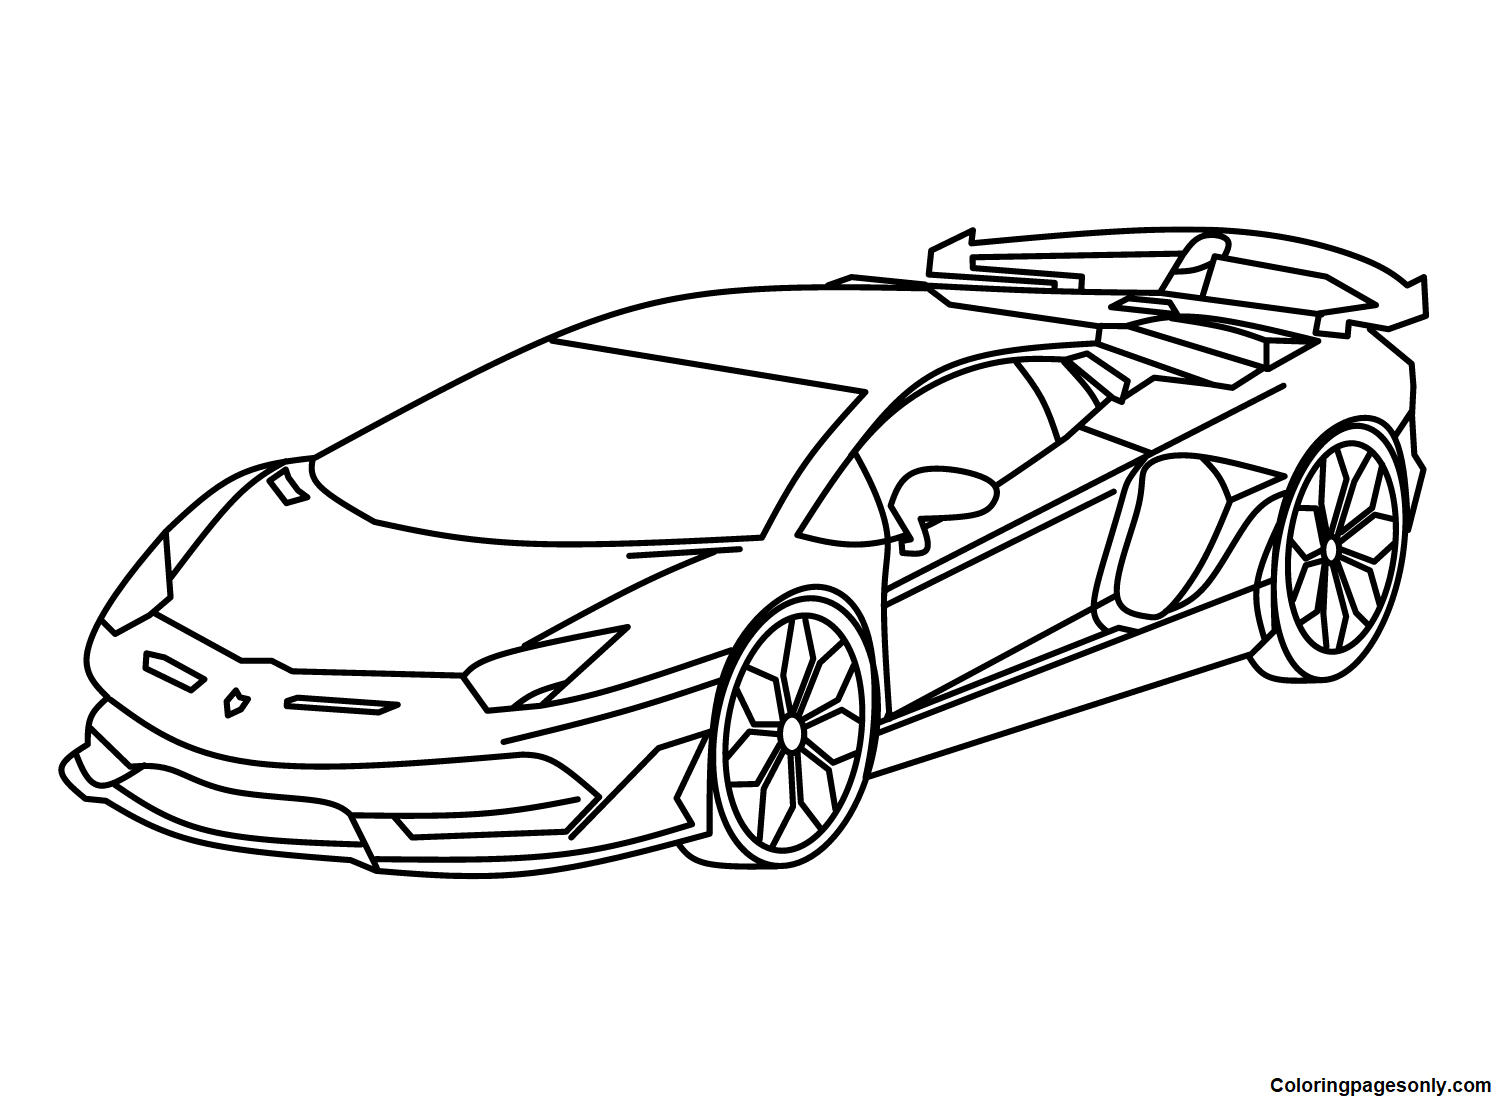 Lamborghini to print Coloring Pages - Lamborghini Coloring Pages - Coloring  Pages For Kids And Adults